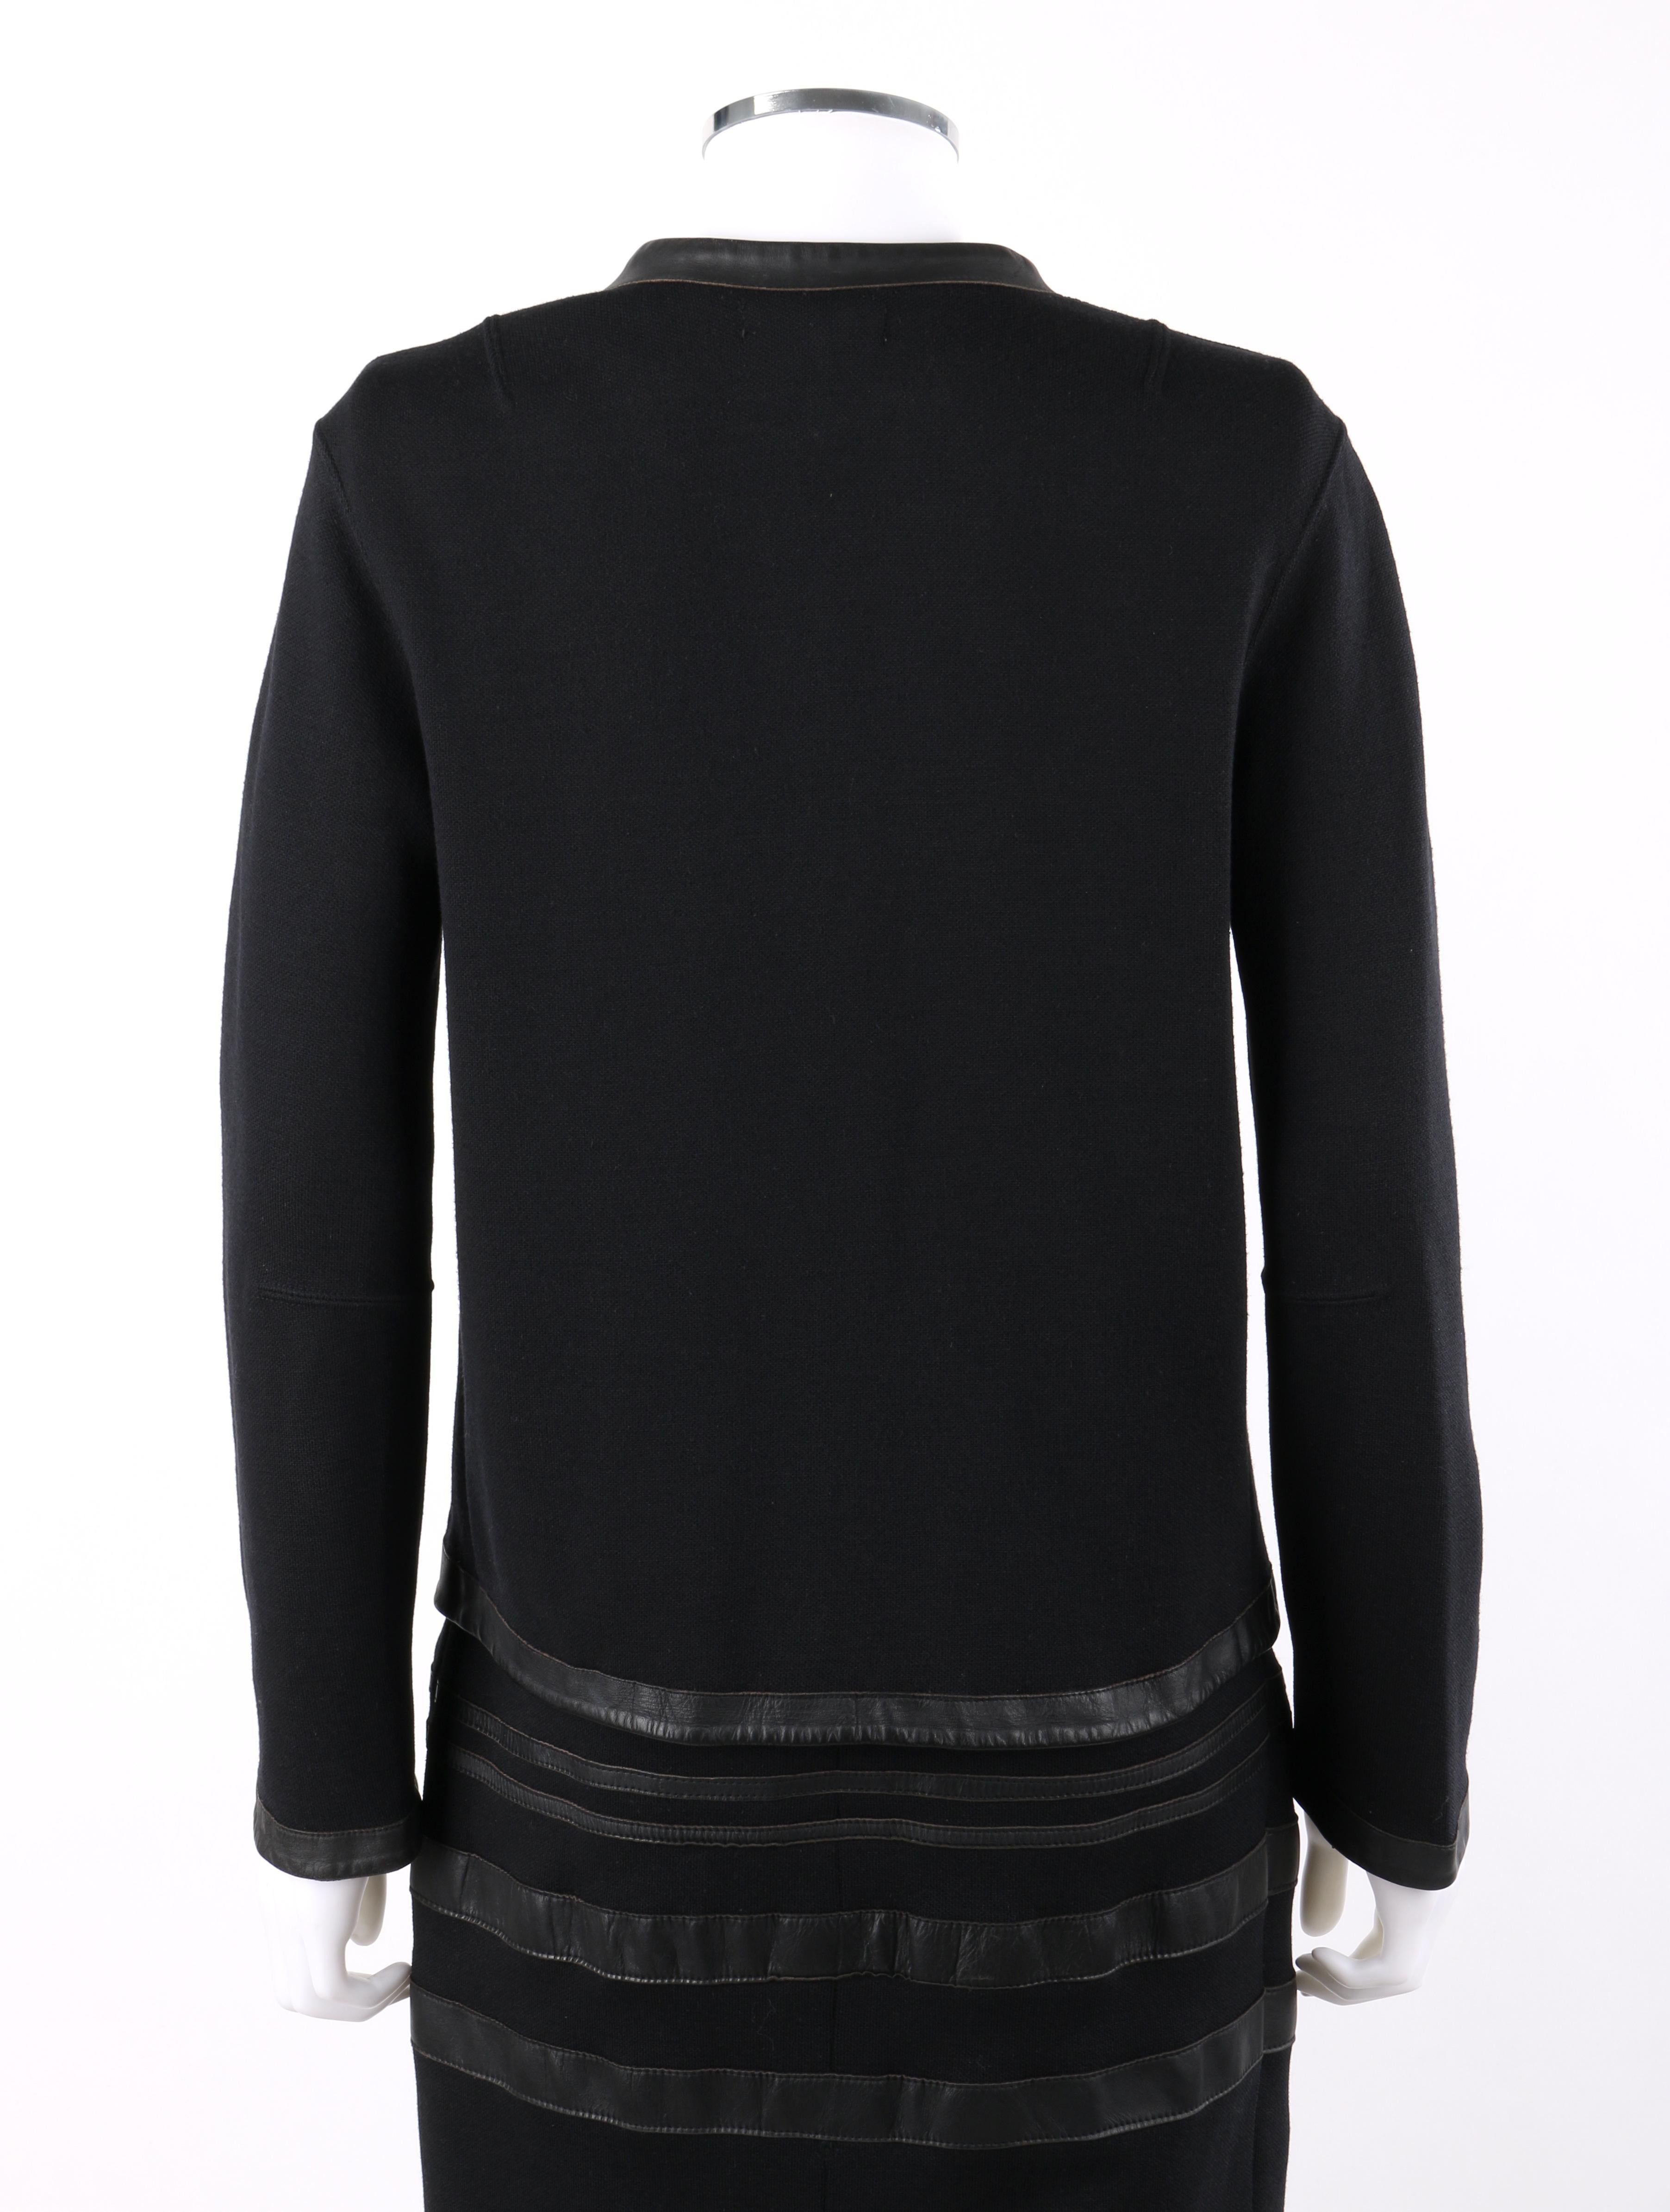 RUDI GERNREICH c.1960s 2 Pc Wool Knit & Leather Open Jacket Shift Dress Suit Set For Sale 2